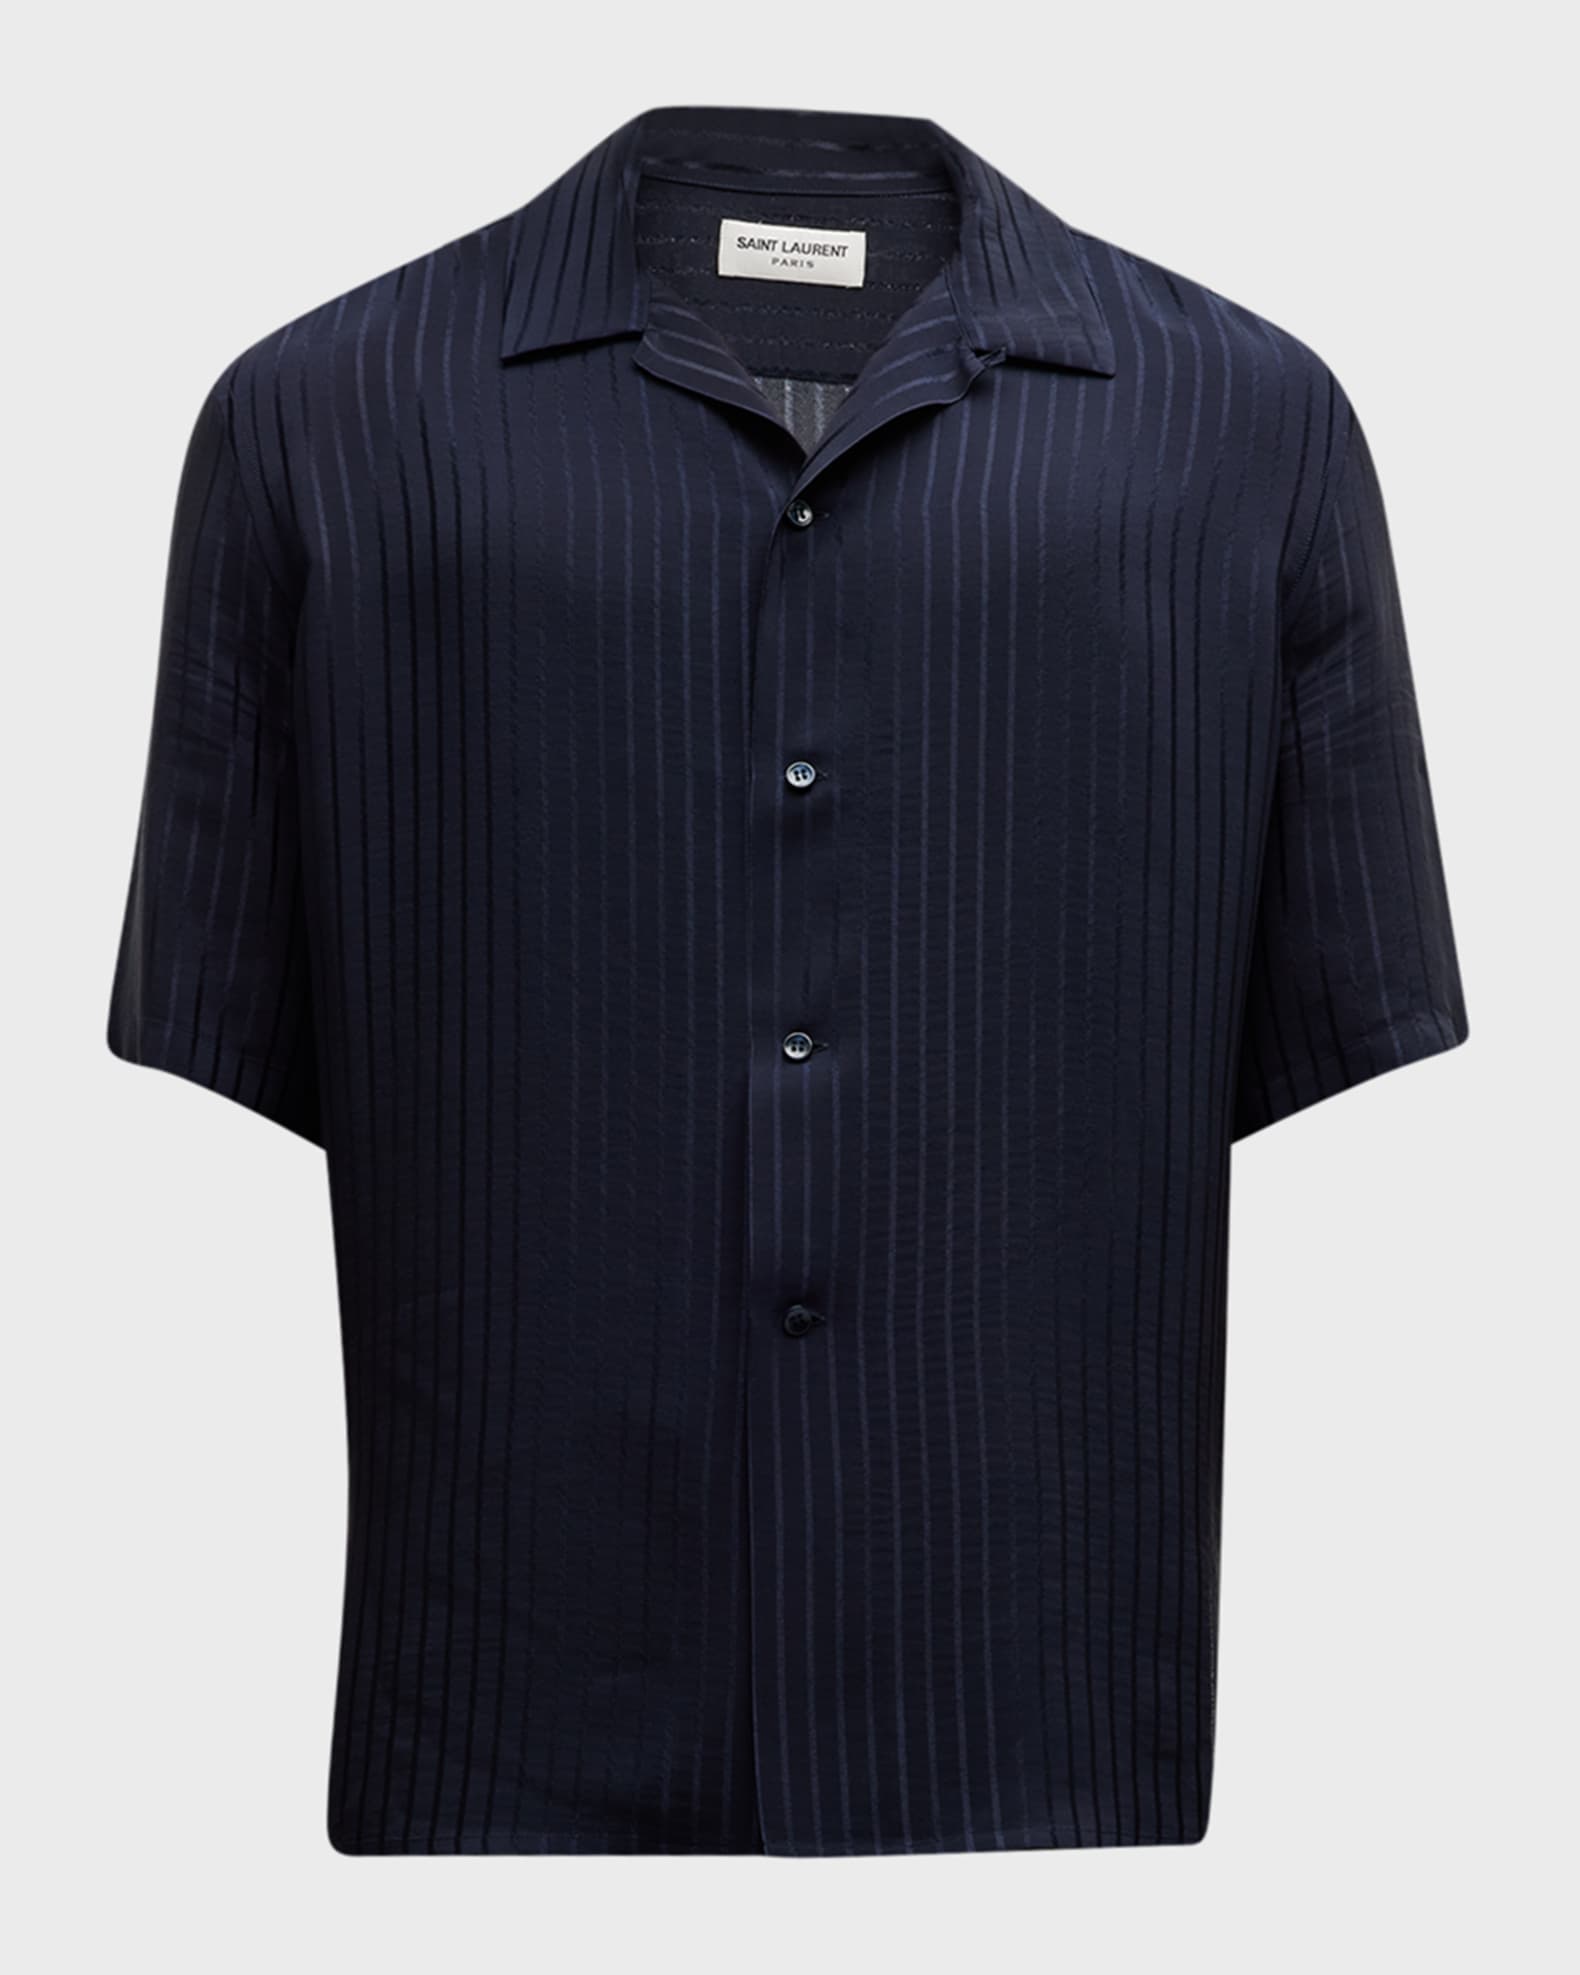 Saint Laurent Men's Jacquard Stripe Silk Camp Shirt | Neiman Marcus